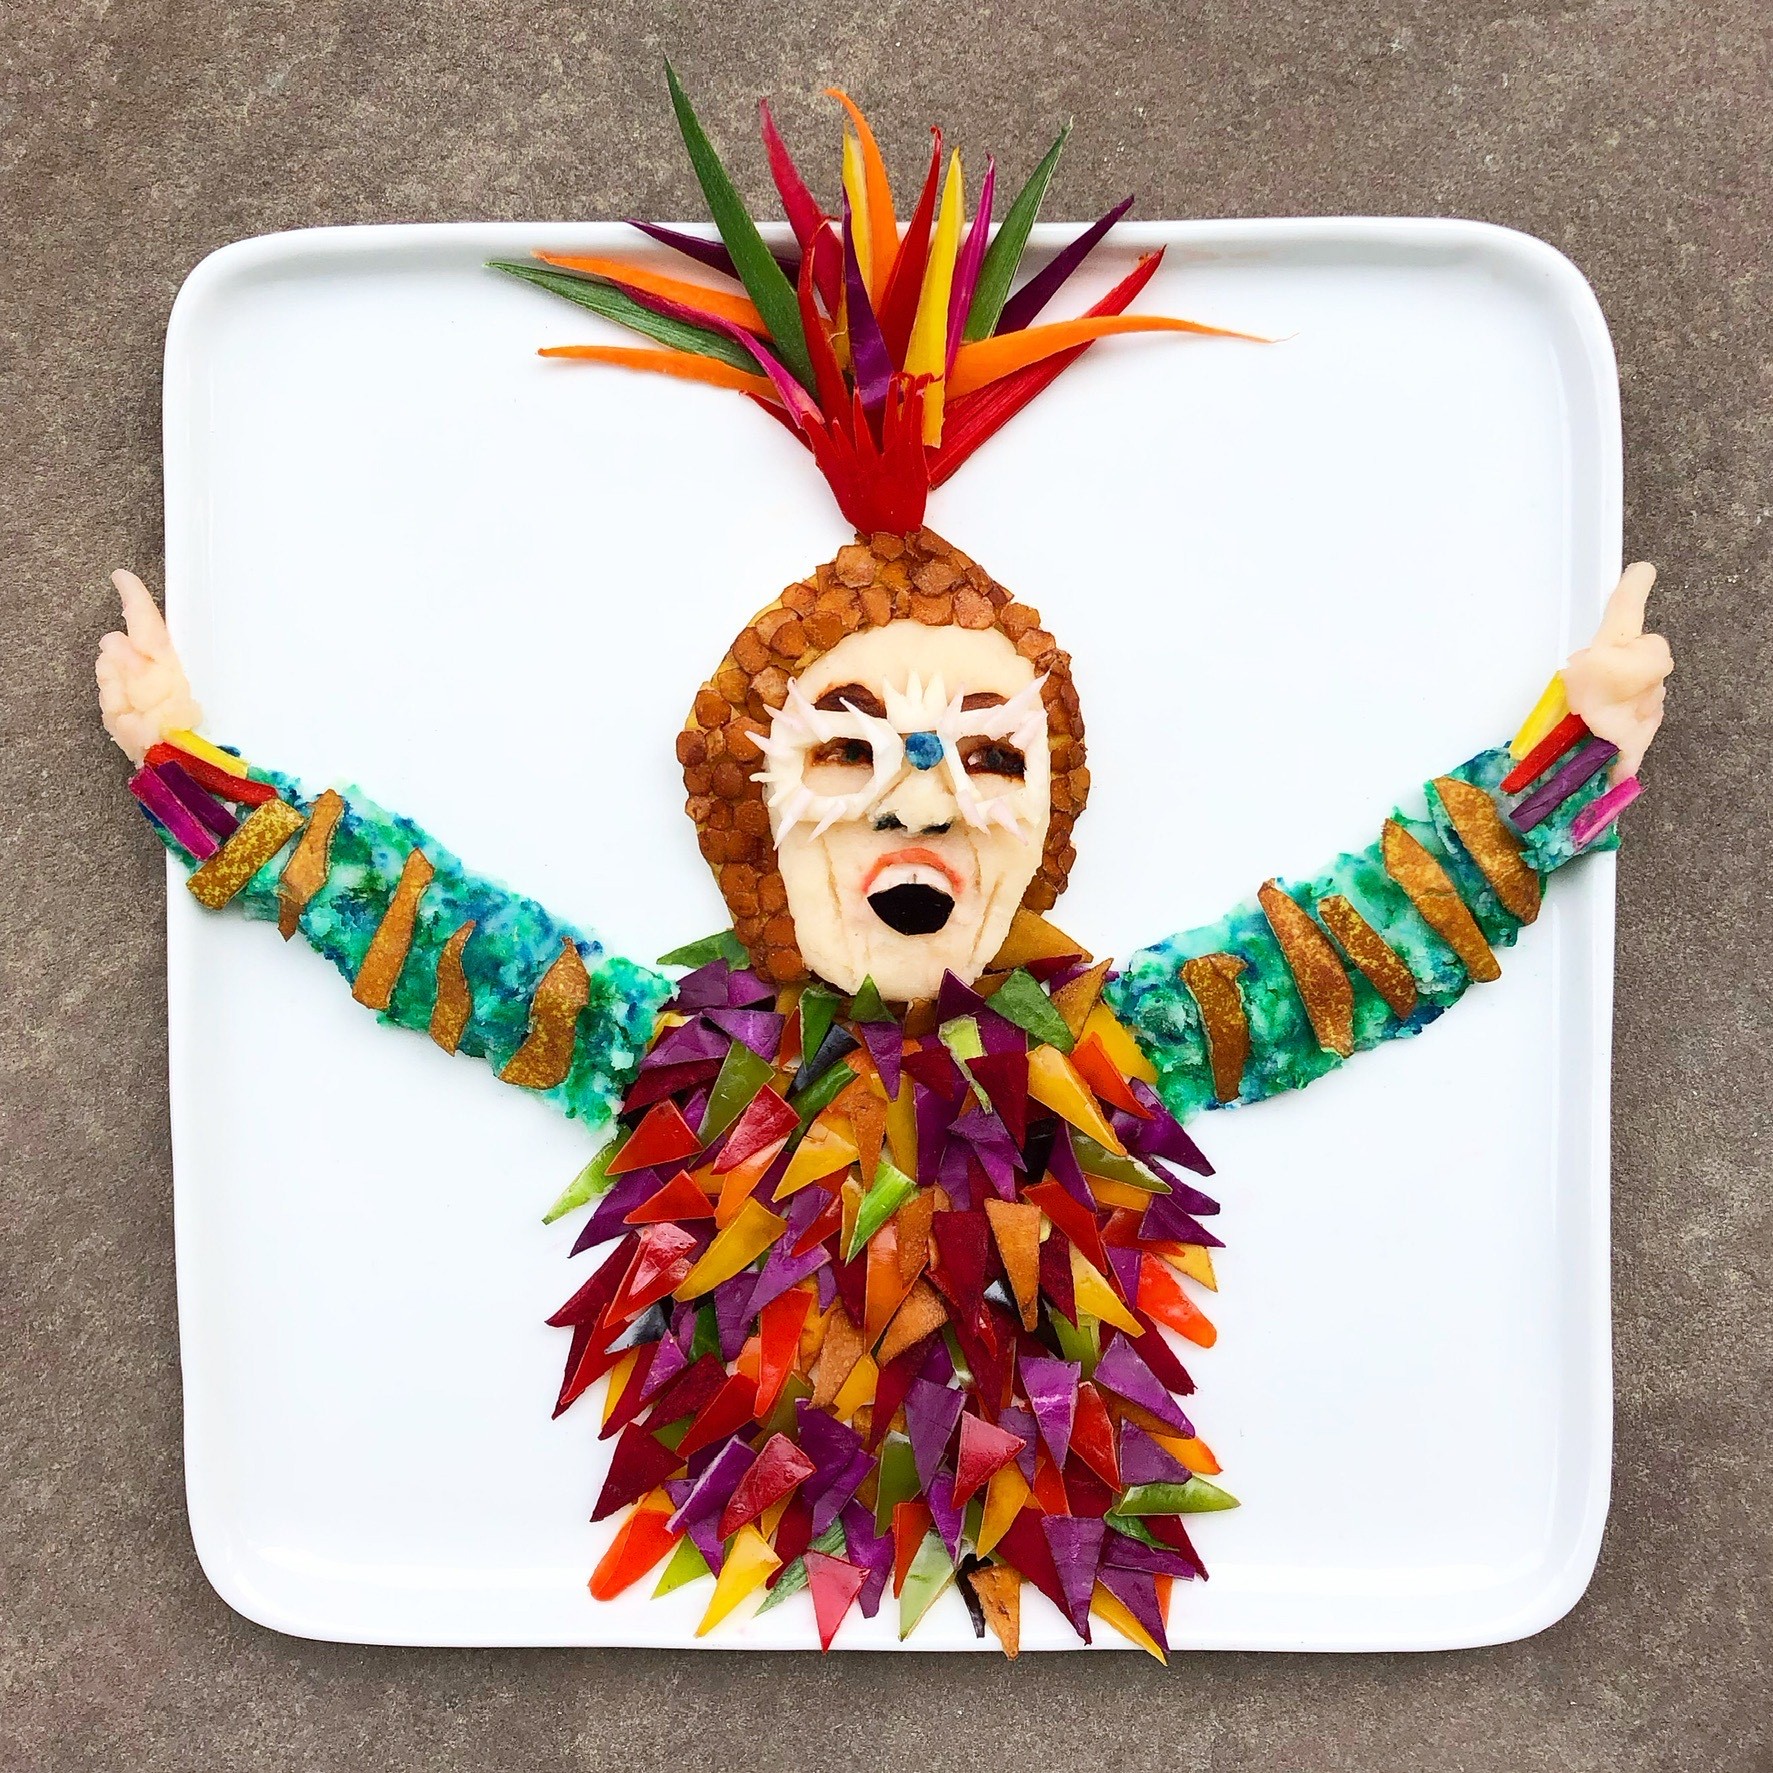 Elton John recreated in food by Harley Langberg